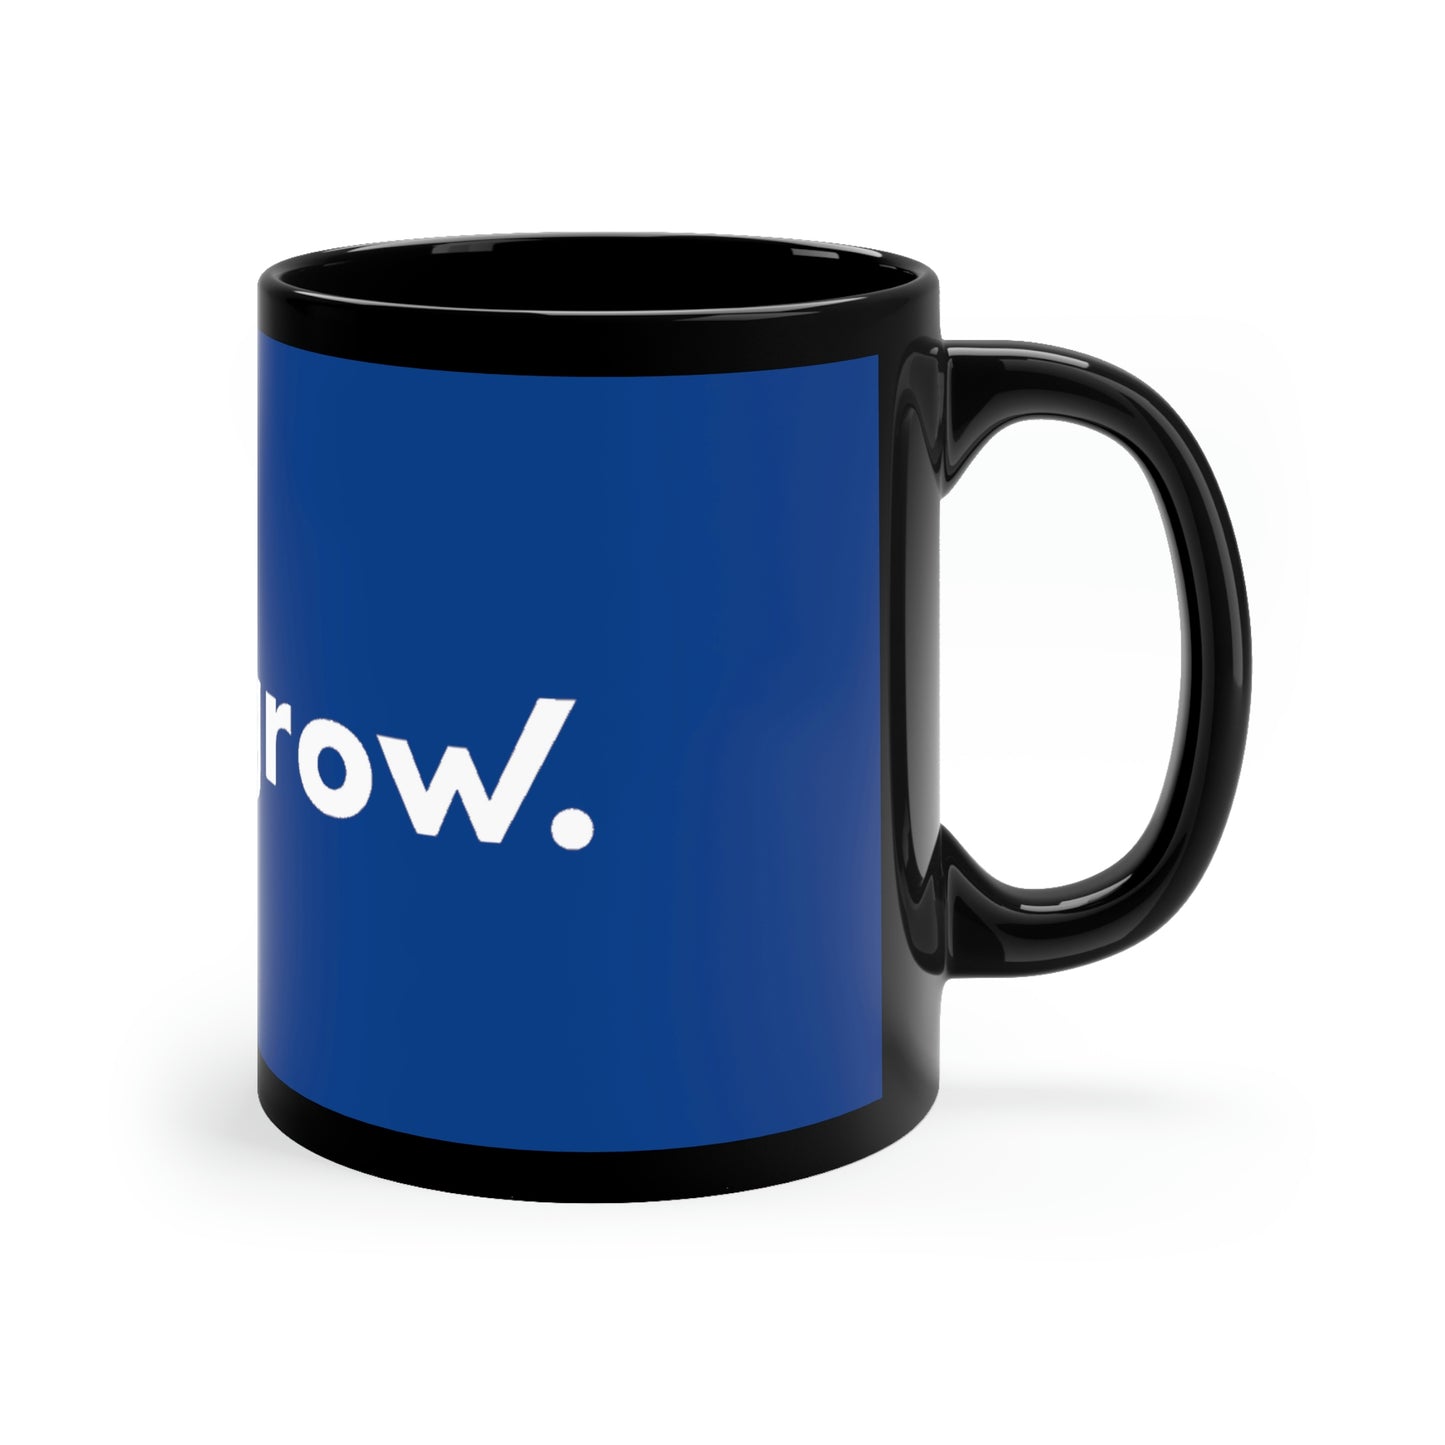 USA - 11oz Black Mug in Dark Blue with evergrow in white